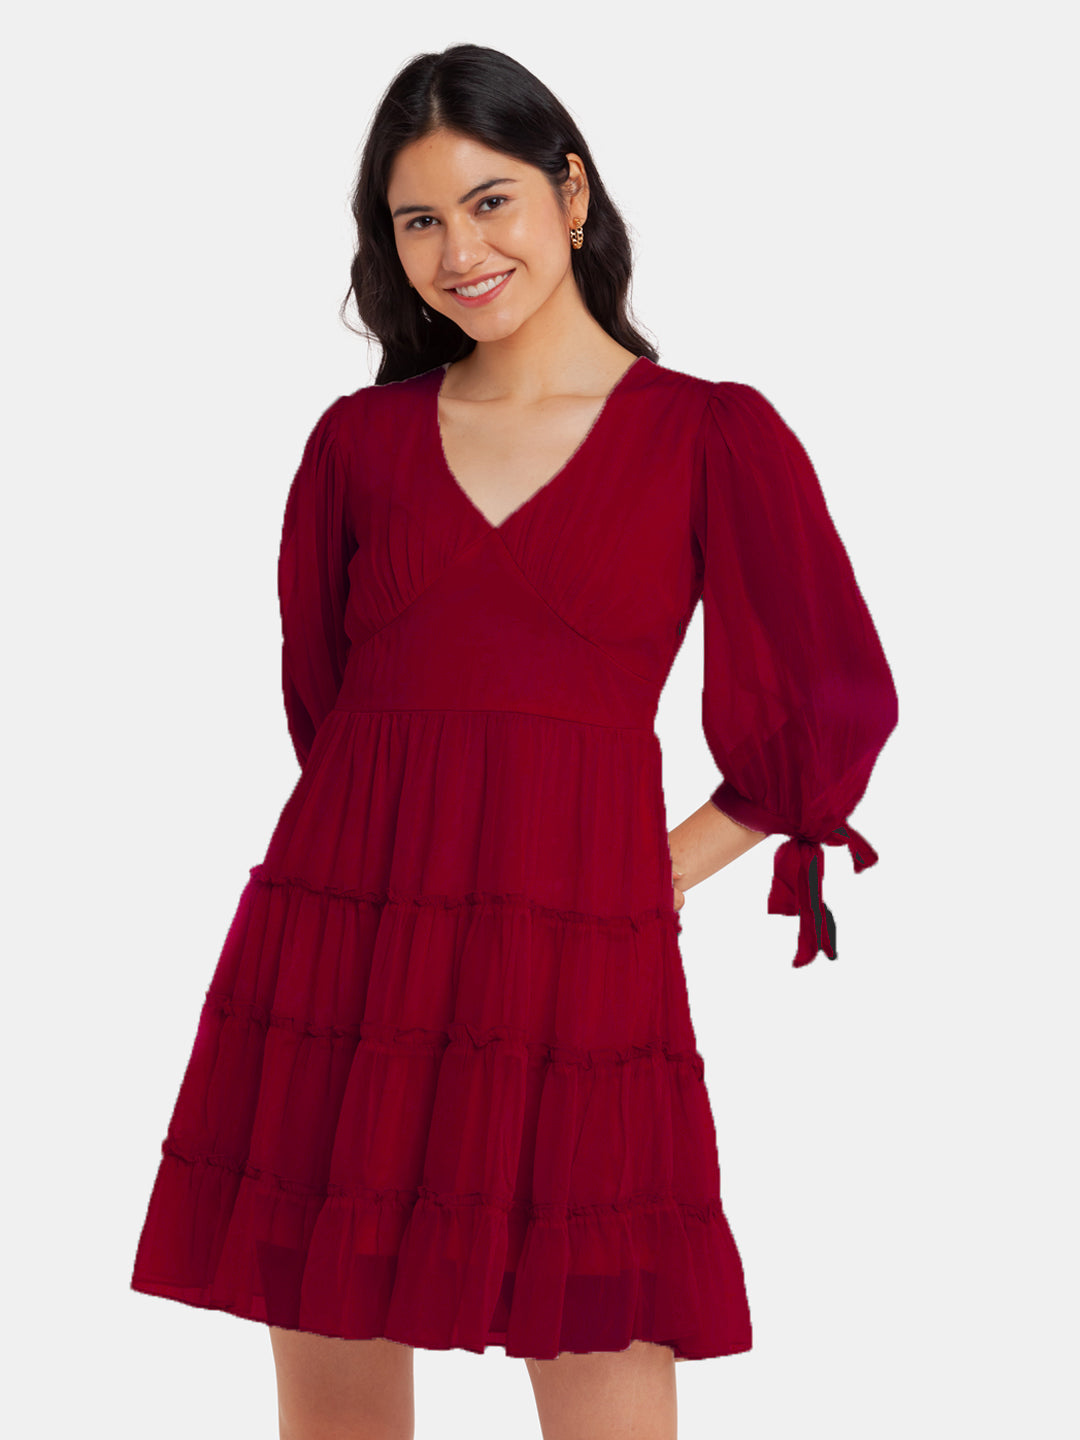 Crimson-Red-Solid-Fit-and-Flare-Short-Dress-VD02165_227-CrimsonRed-2